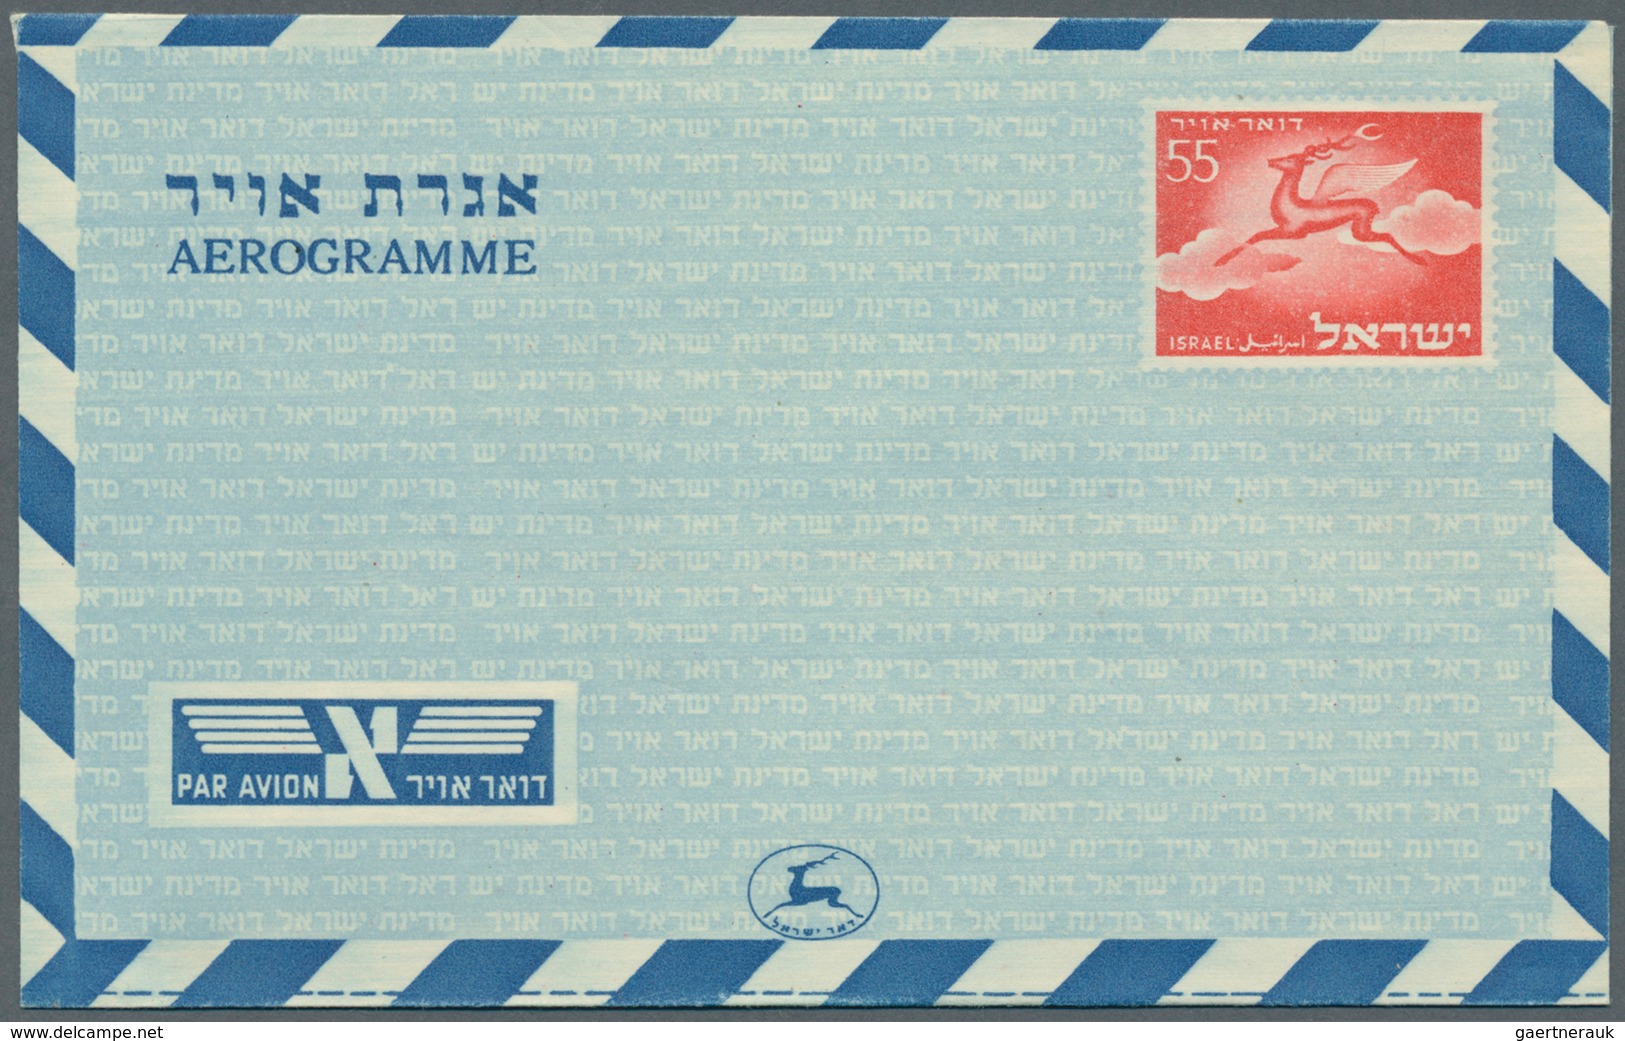 22858 Israel: 1950/1973 (ca.), AEROGRAMMES: accumulation with approx. 900 unused and used/CTO aerogrammes